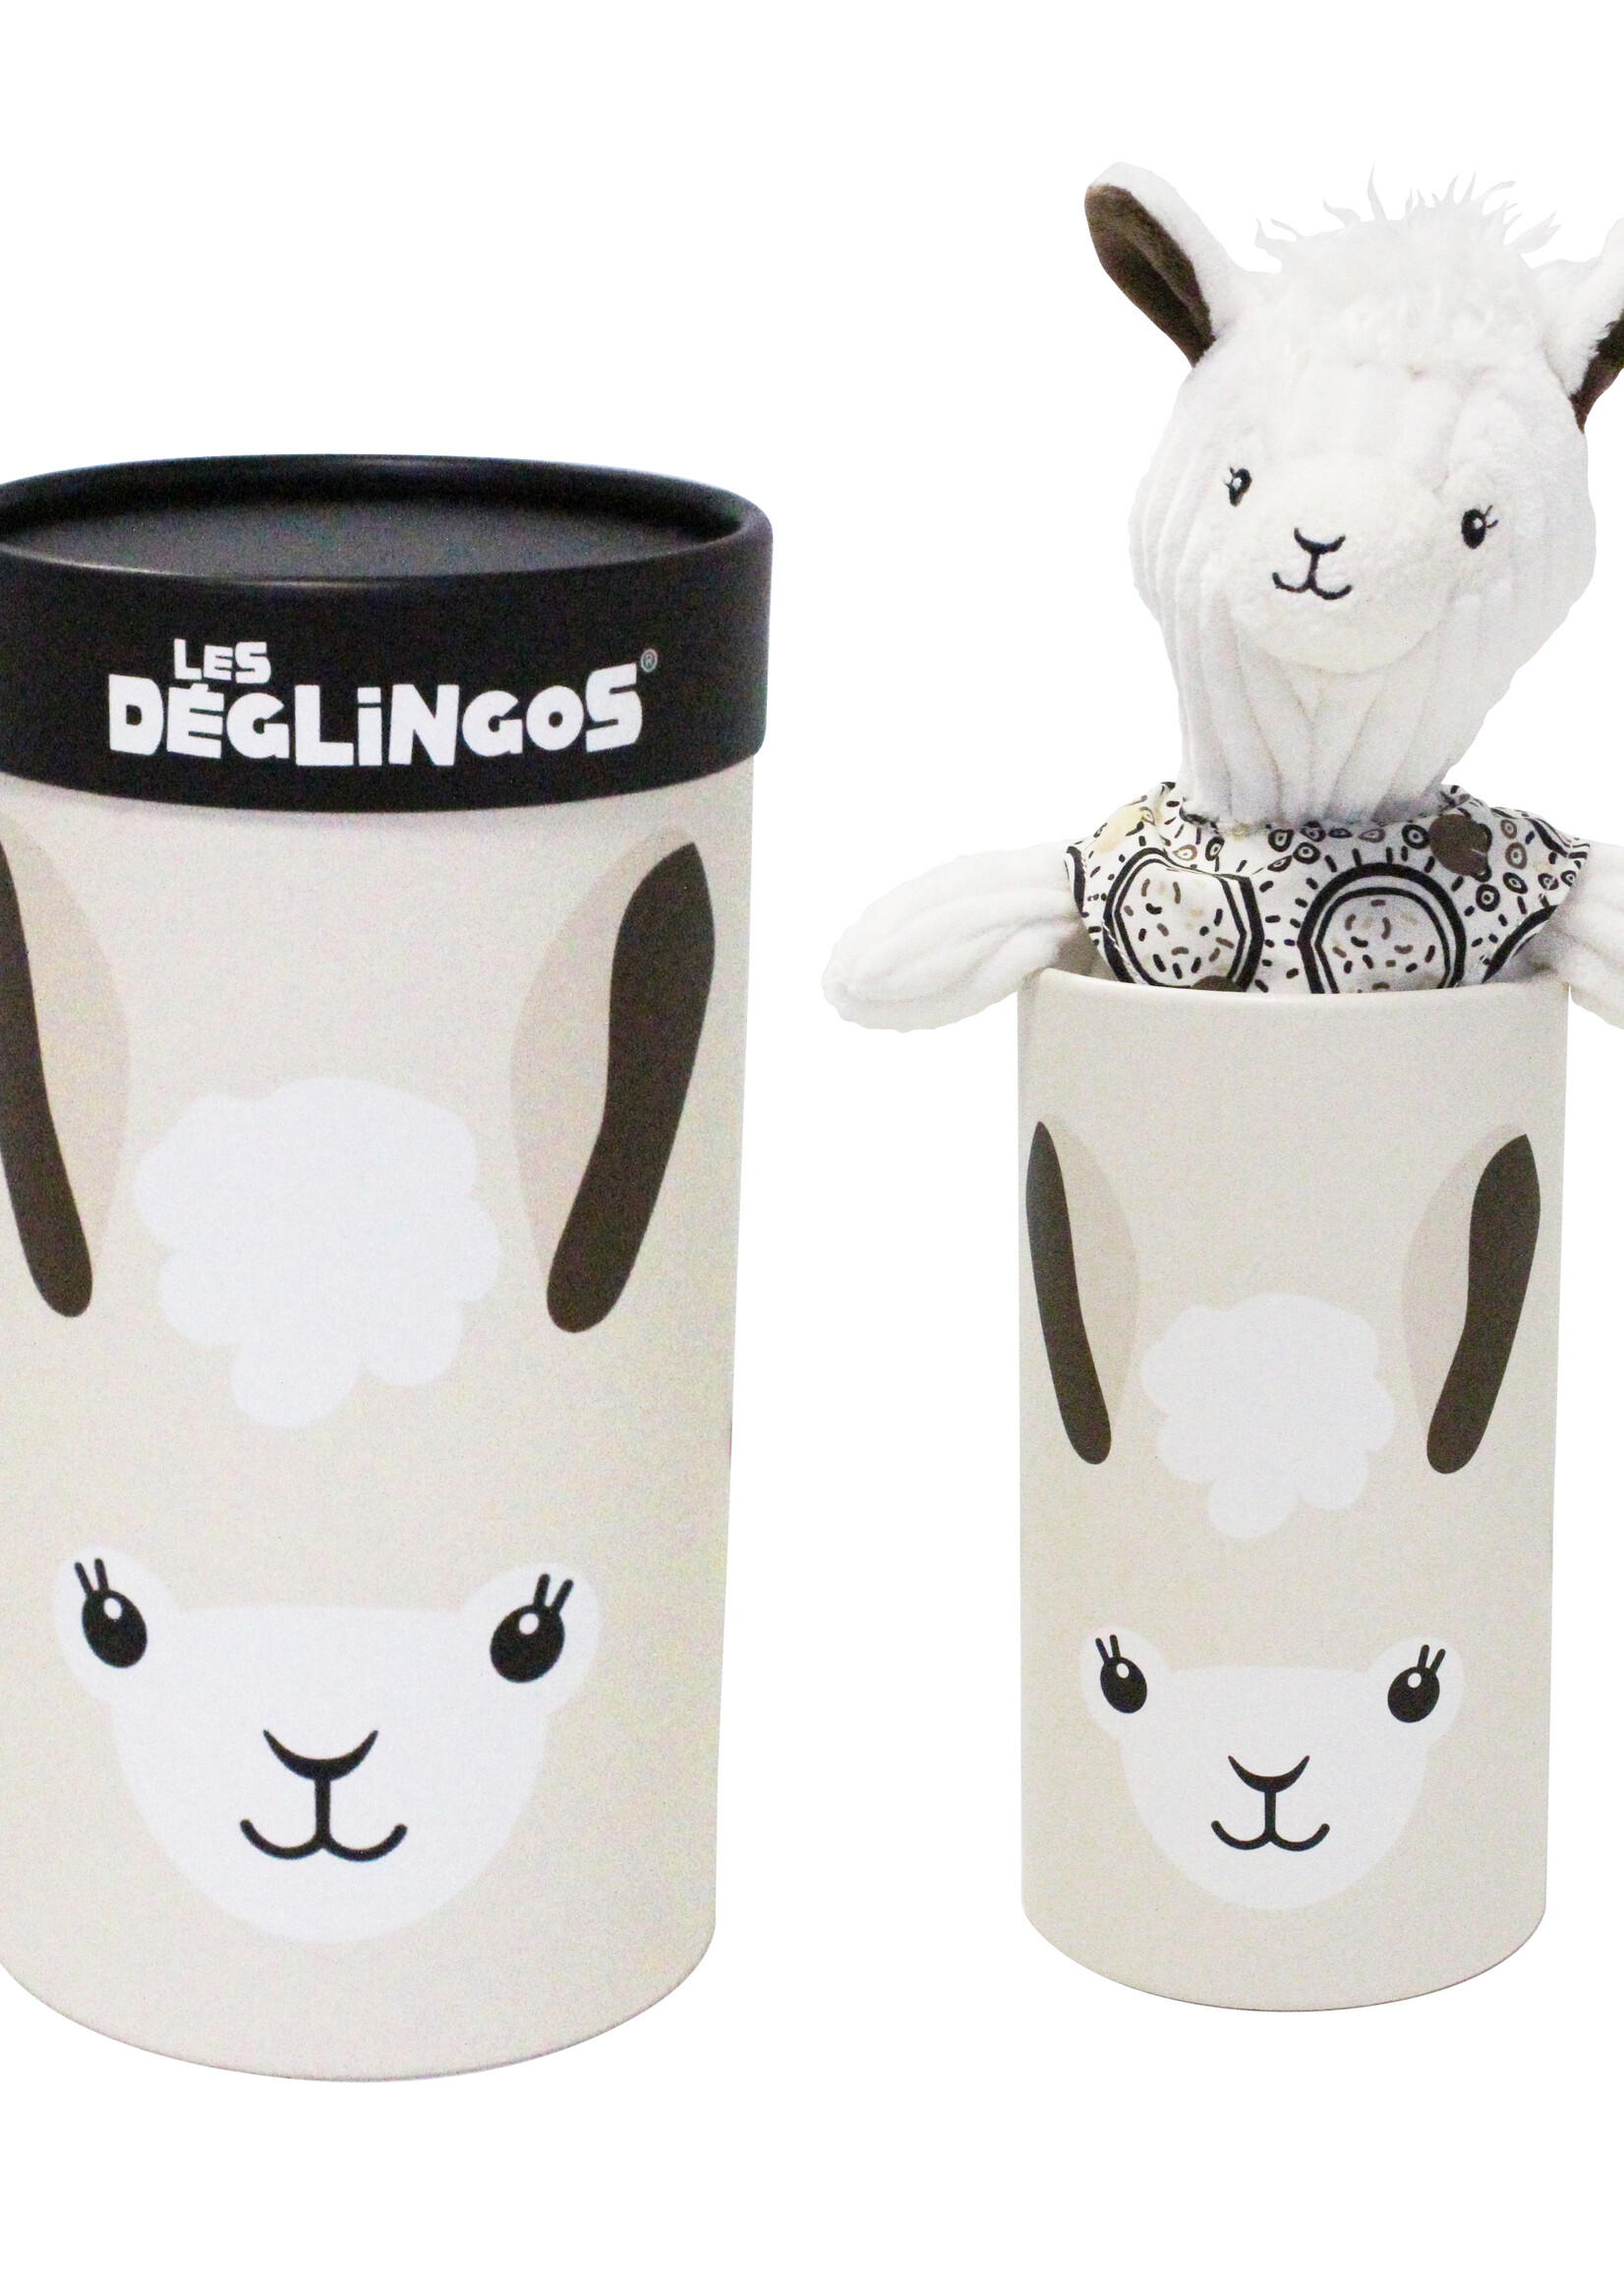 Stuffy - Les Deglingos Simply Llama in Tube